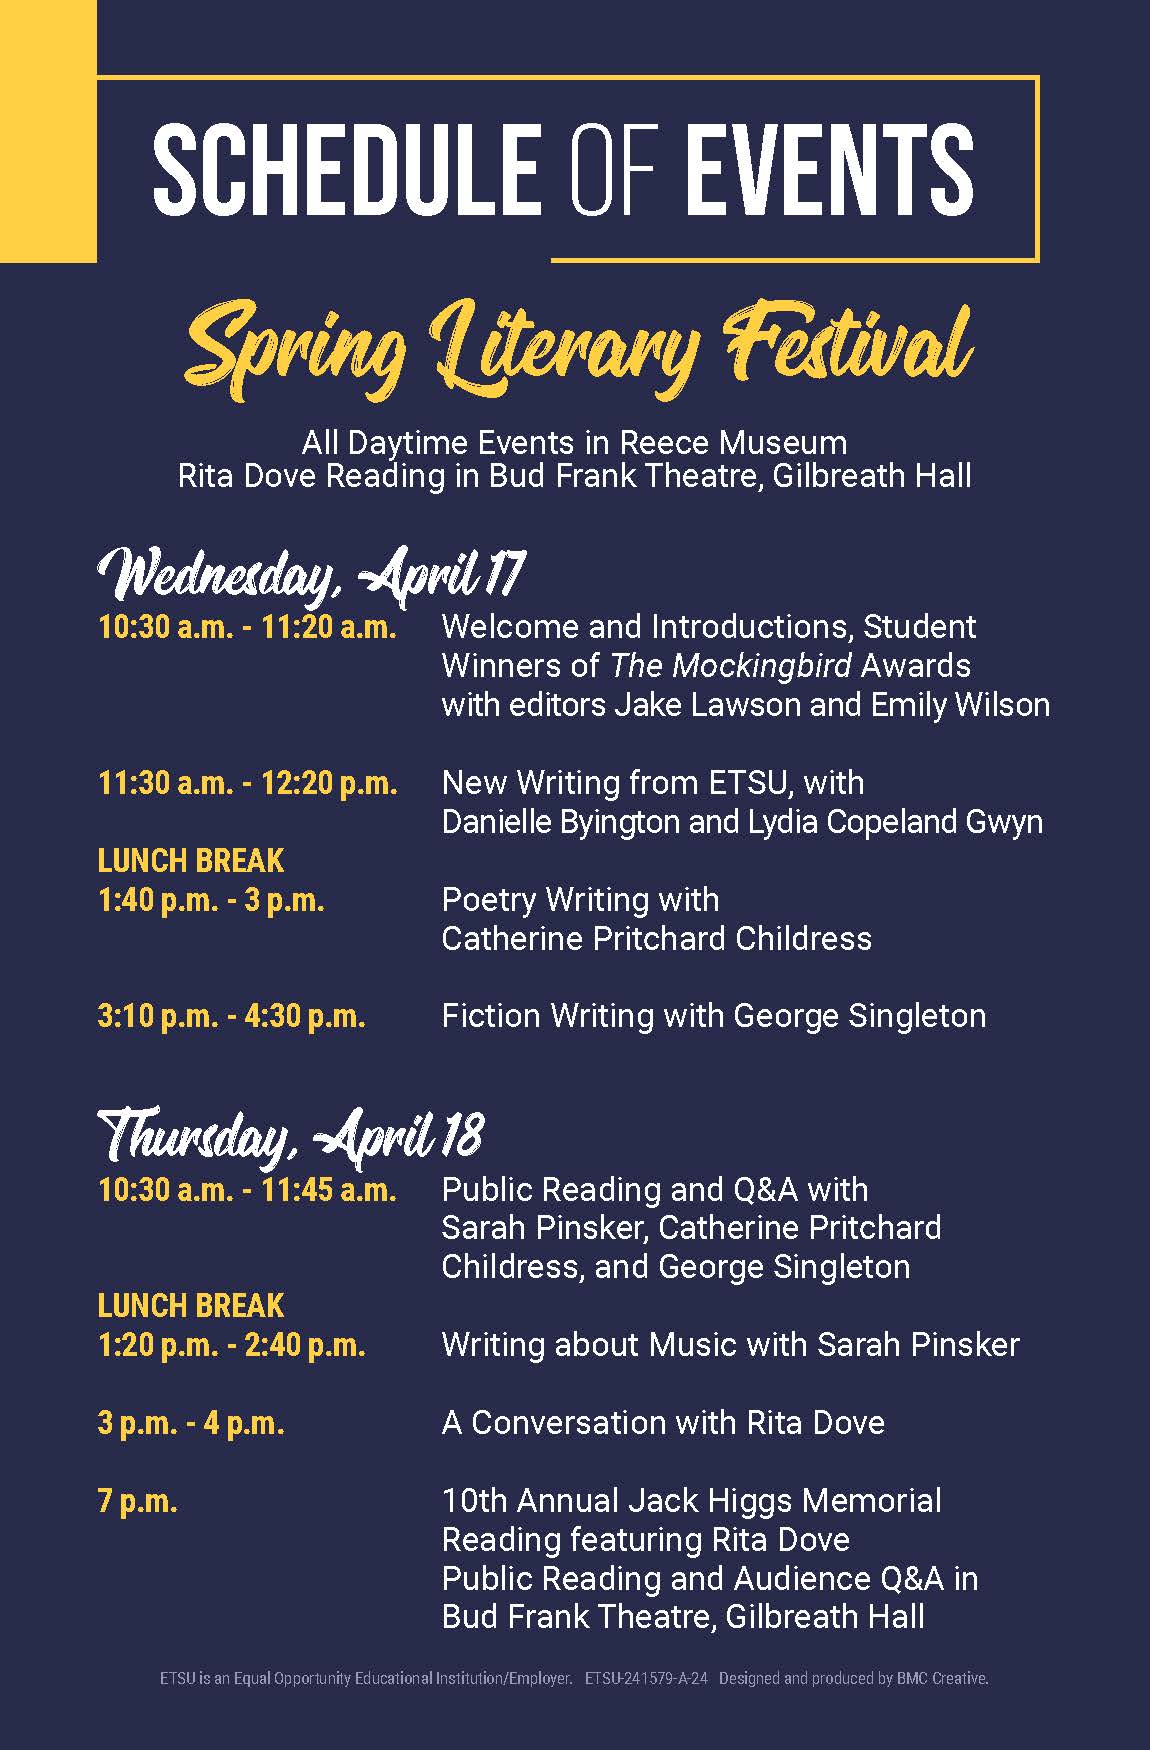 Spring Literary Festival Schedule